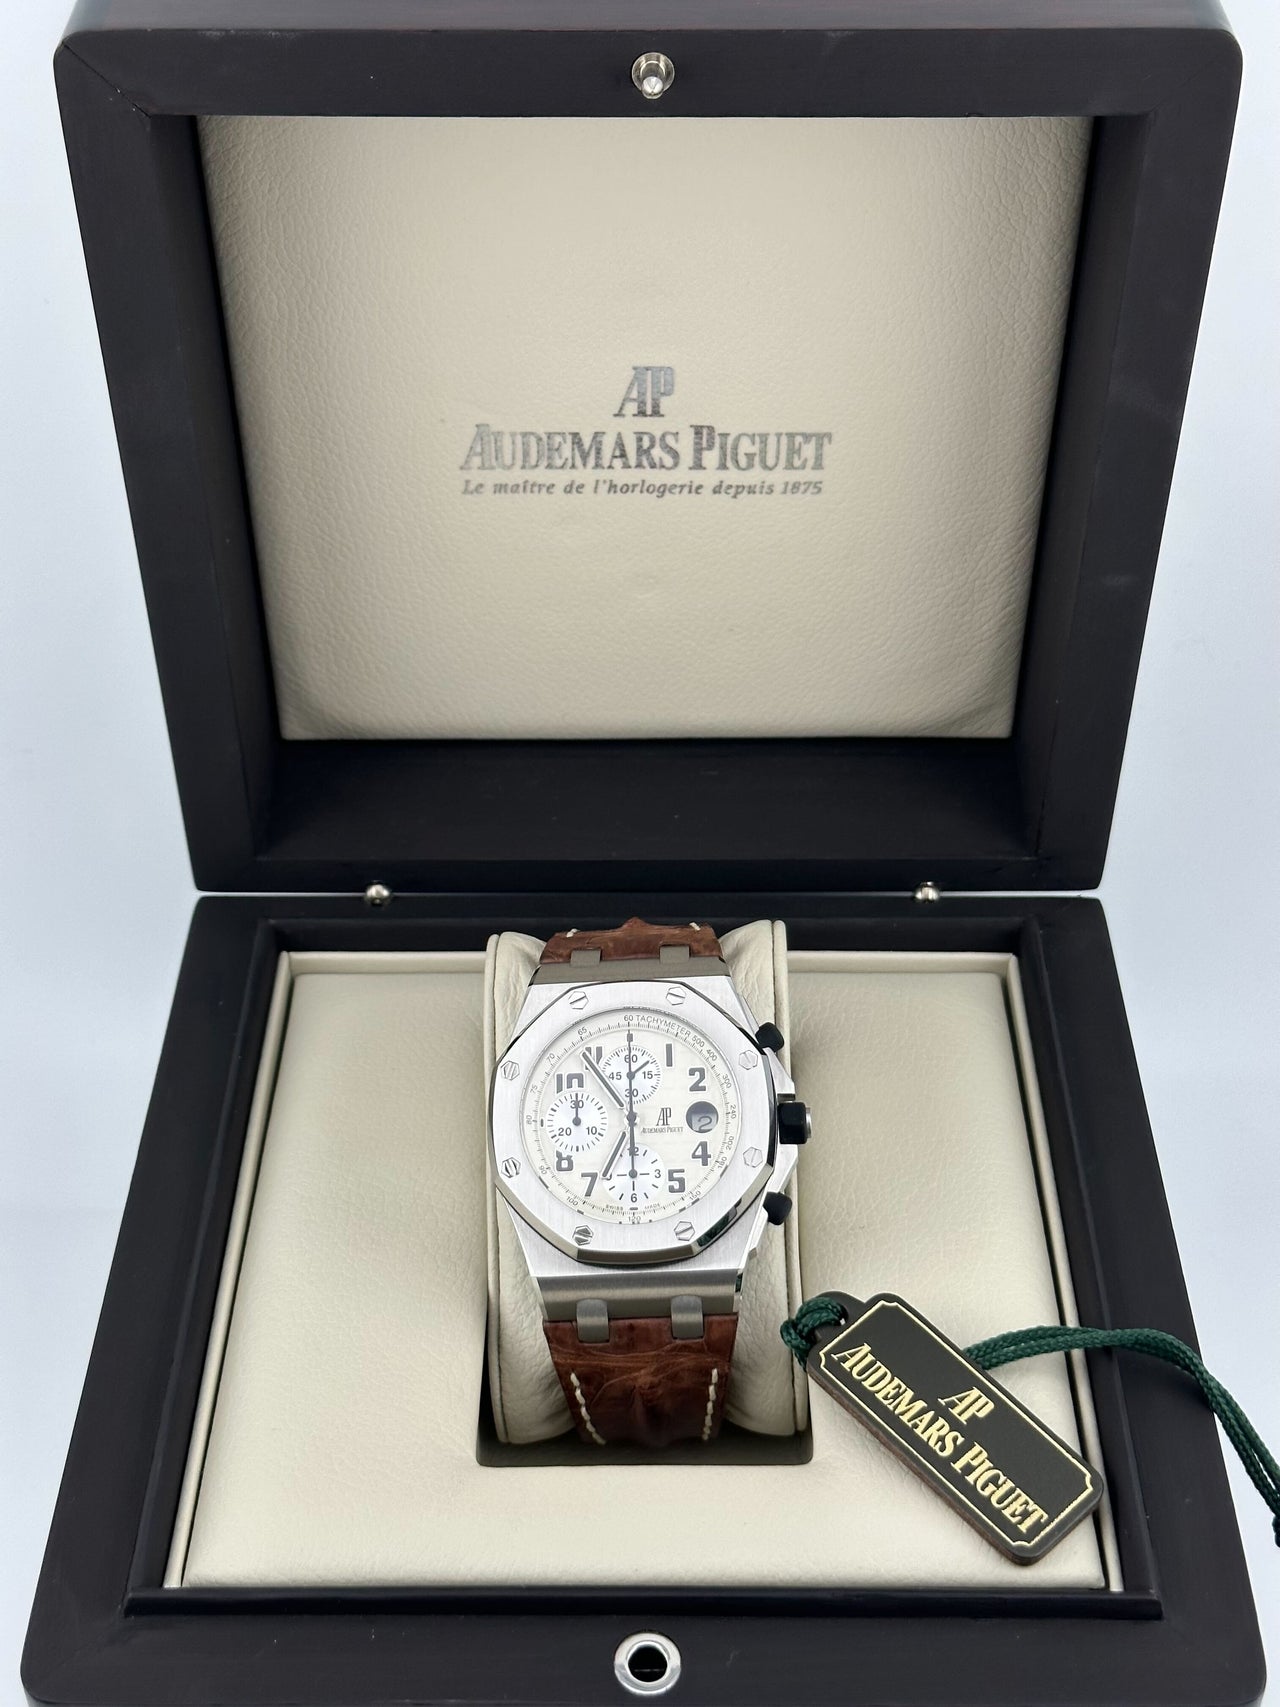 Audemars Piguet Royal Oak Offshore Chronograph "Safari" Stainless Steel White Dial 26020ST.OO.D091CR.01.A Wrist Aficionado